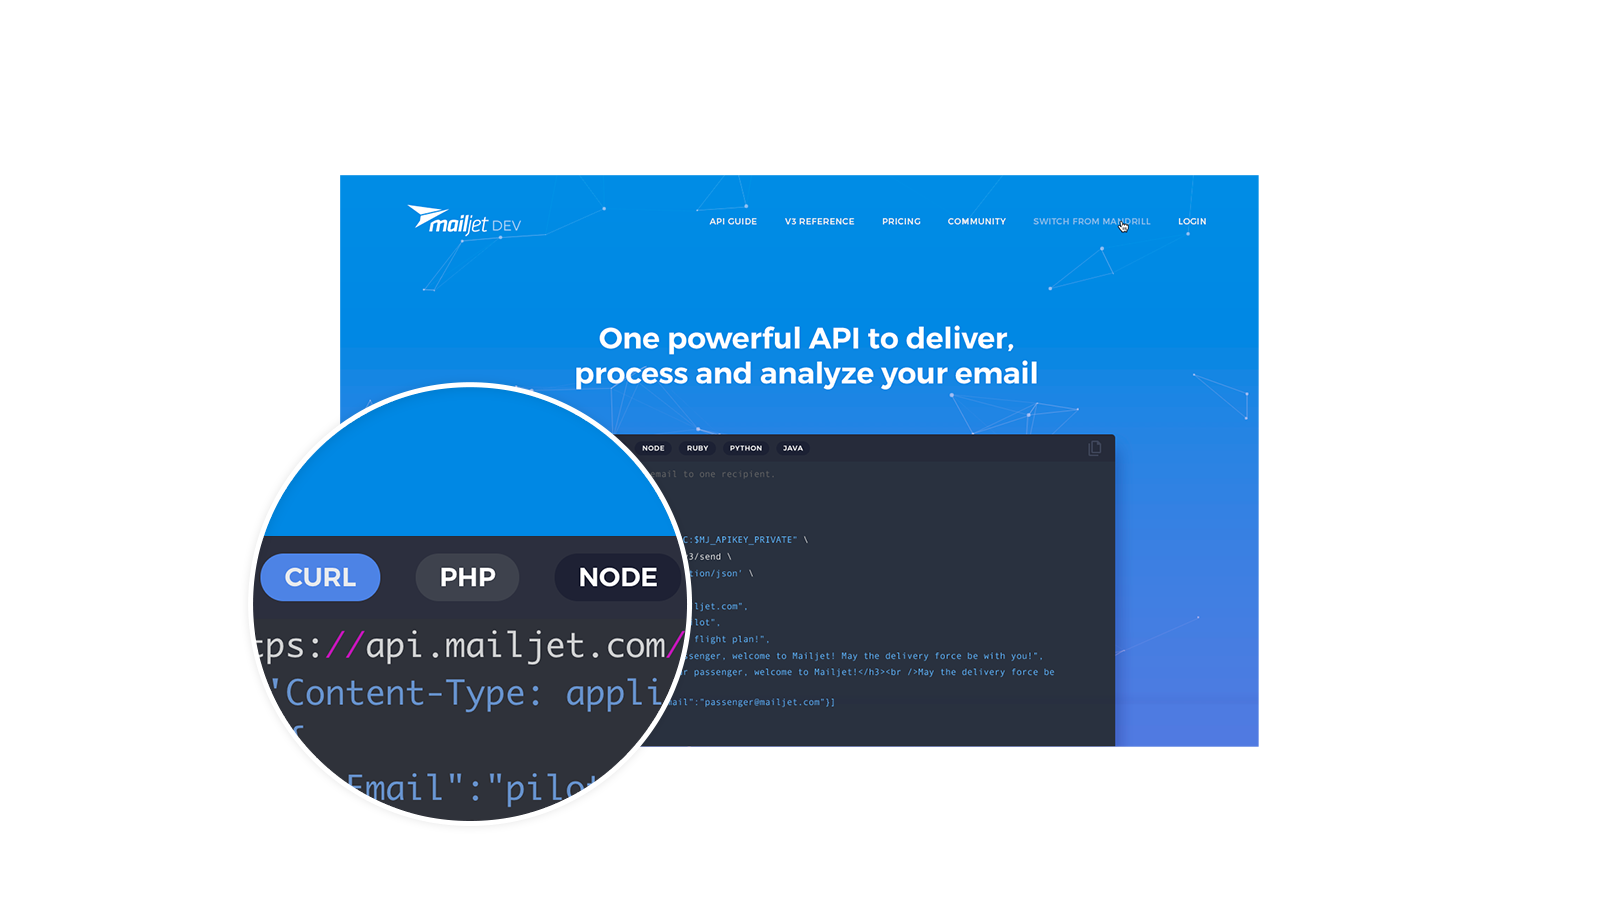 Mailjet Software - One Powerful API